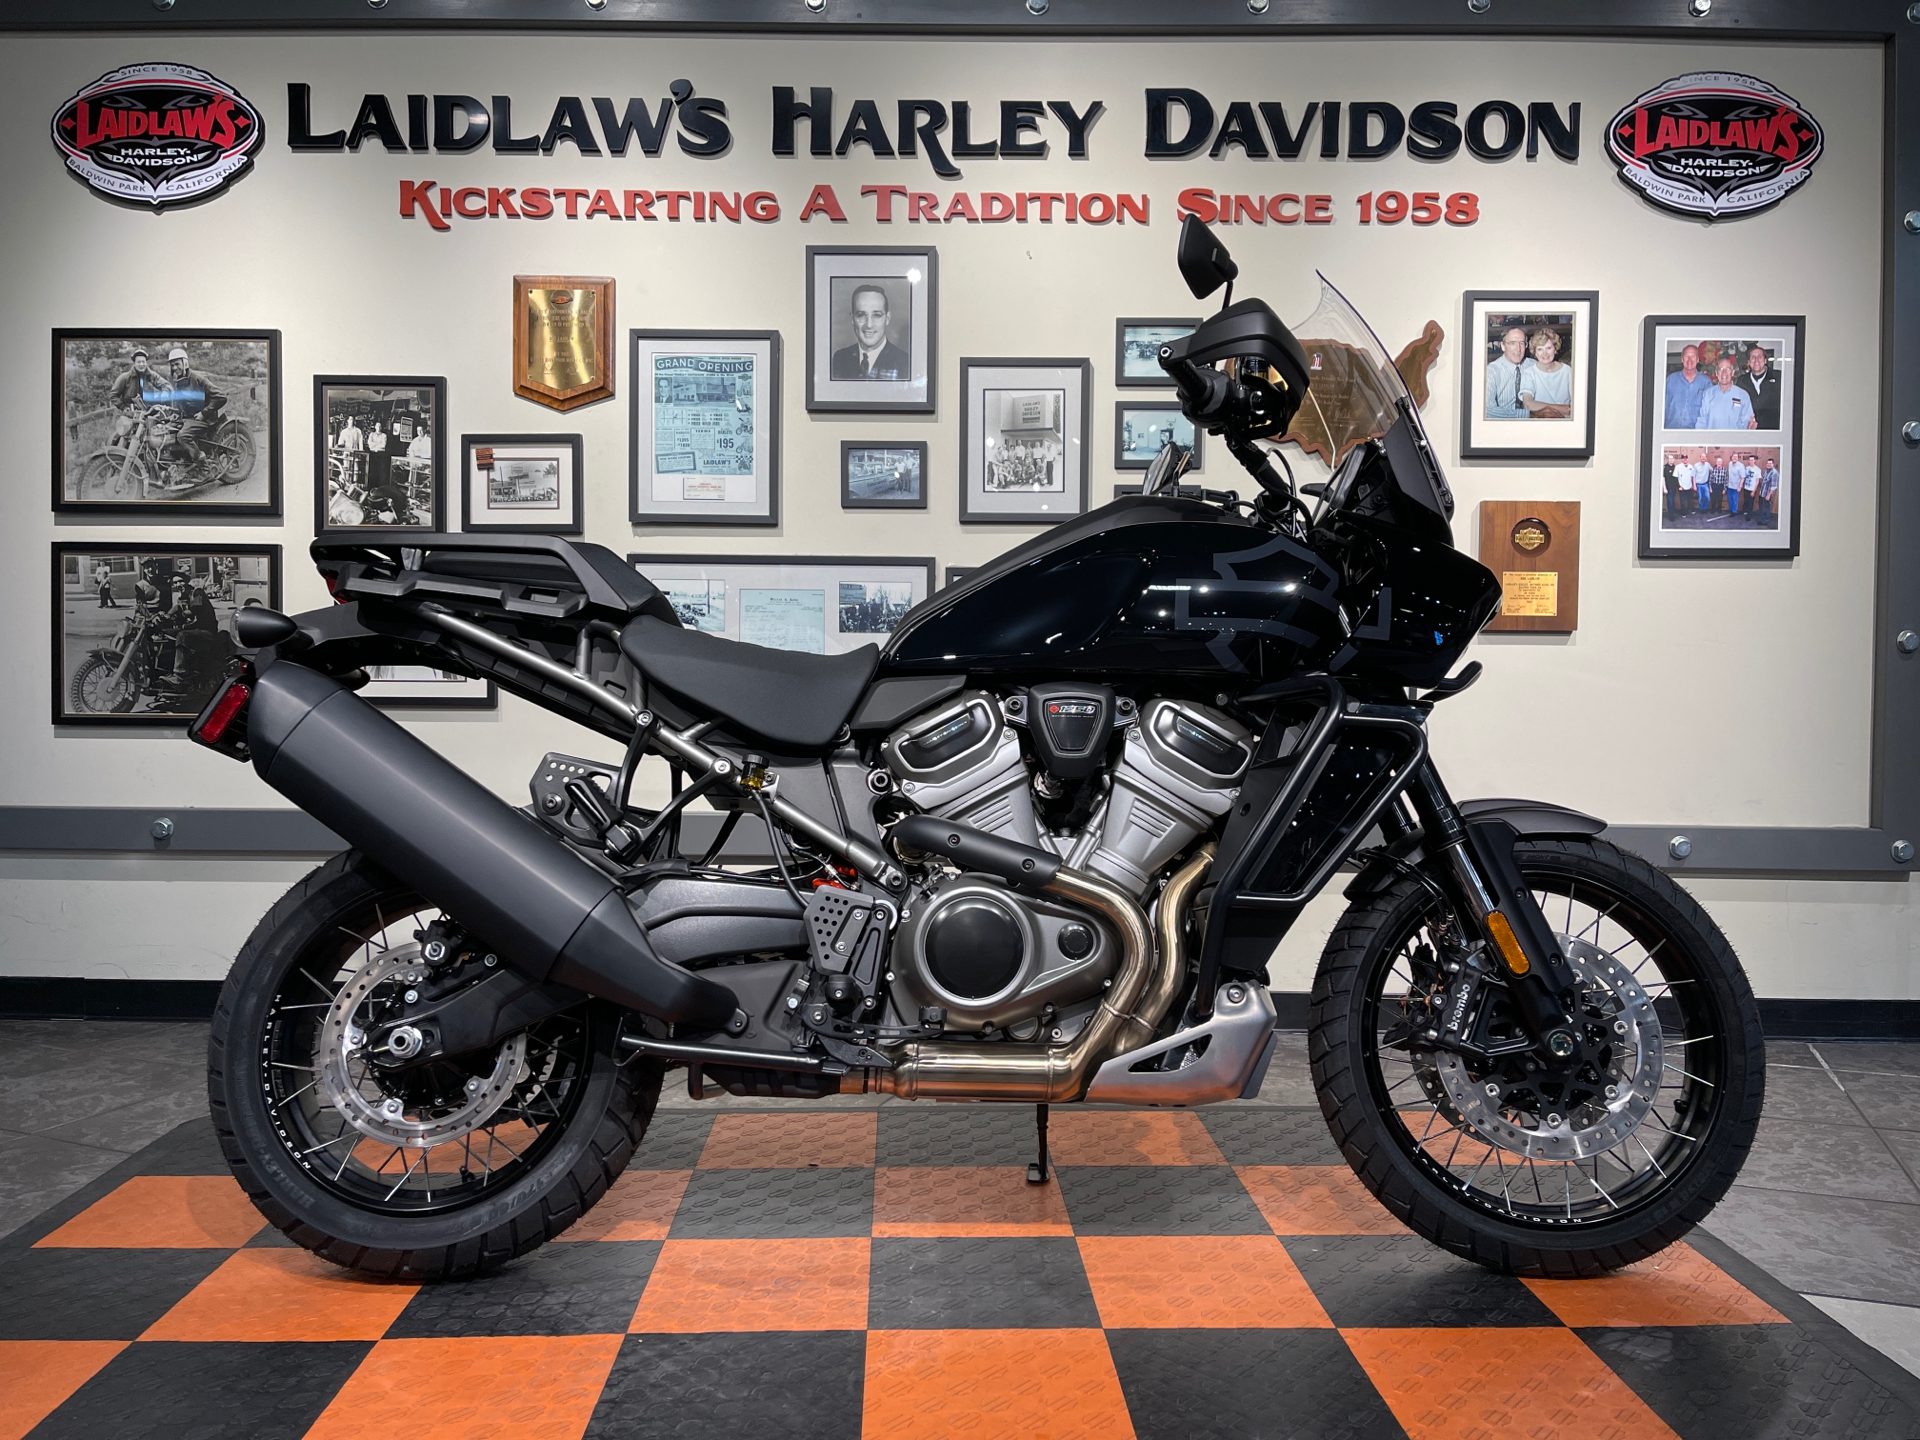 New 2021 Harley Davidson Pan America Special Vivid Black Baldwin Park Ca 29182